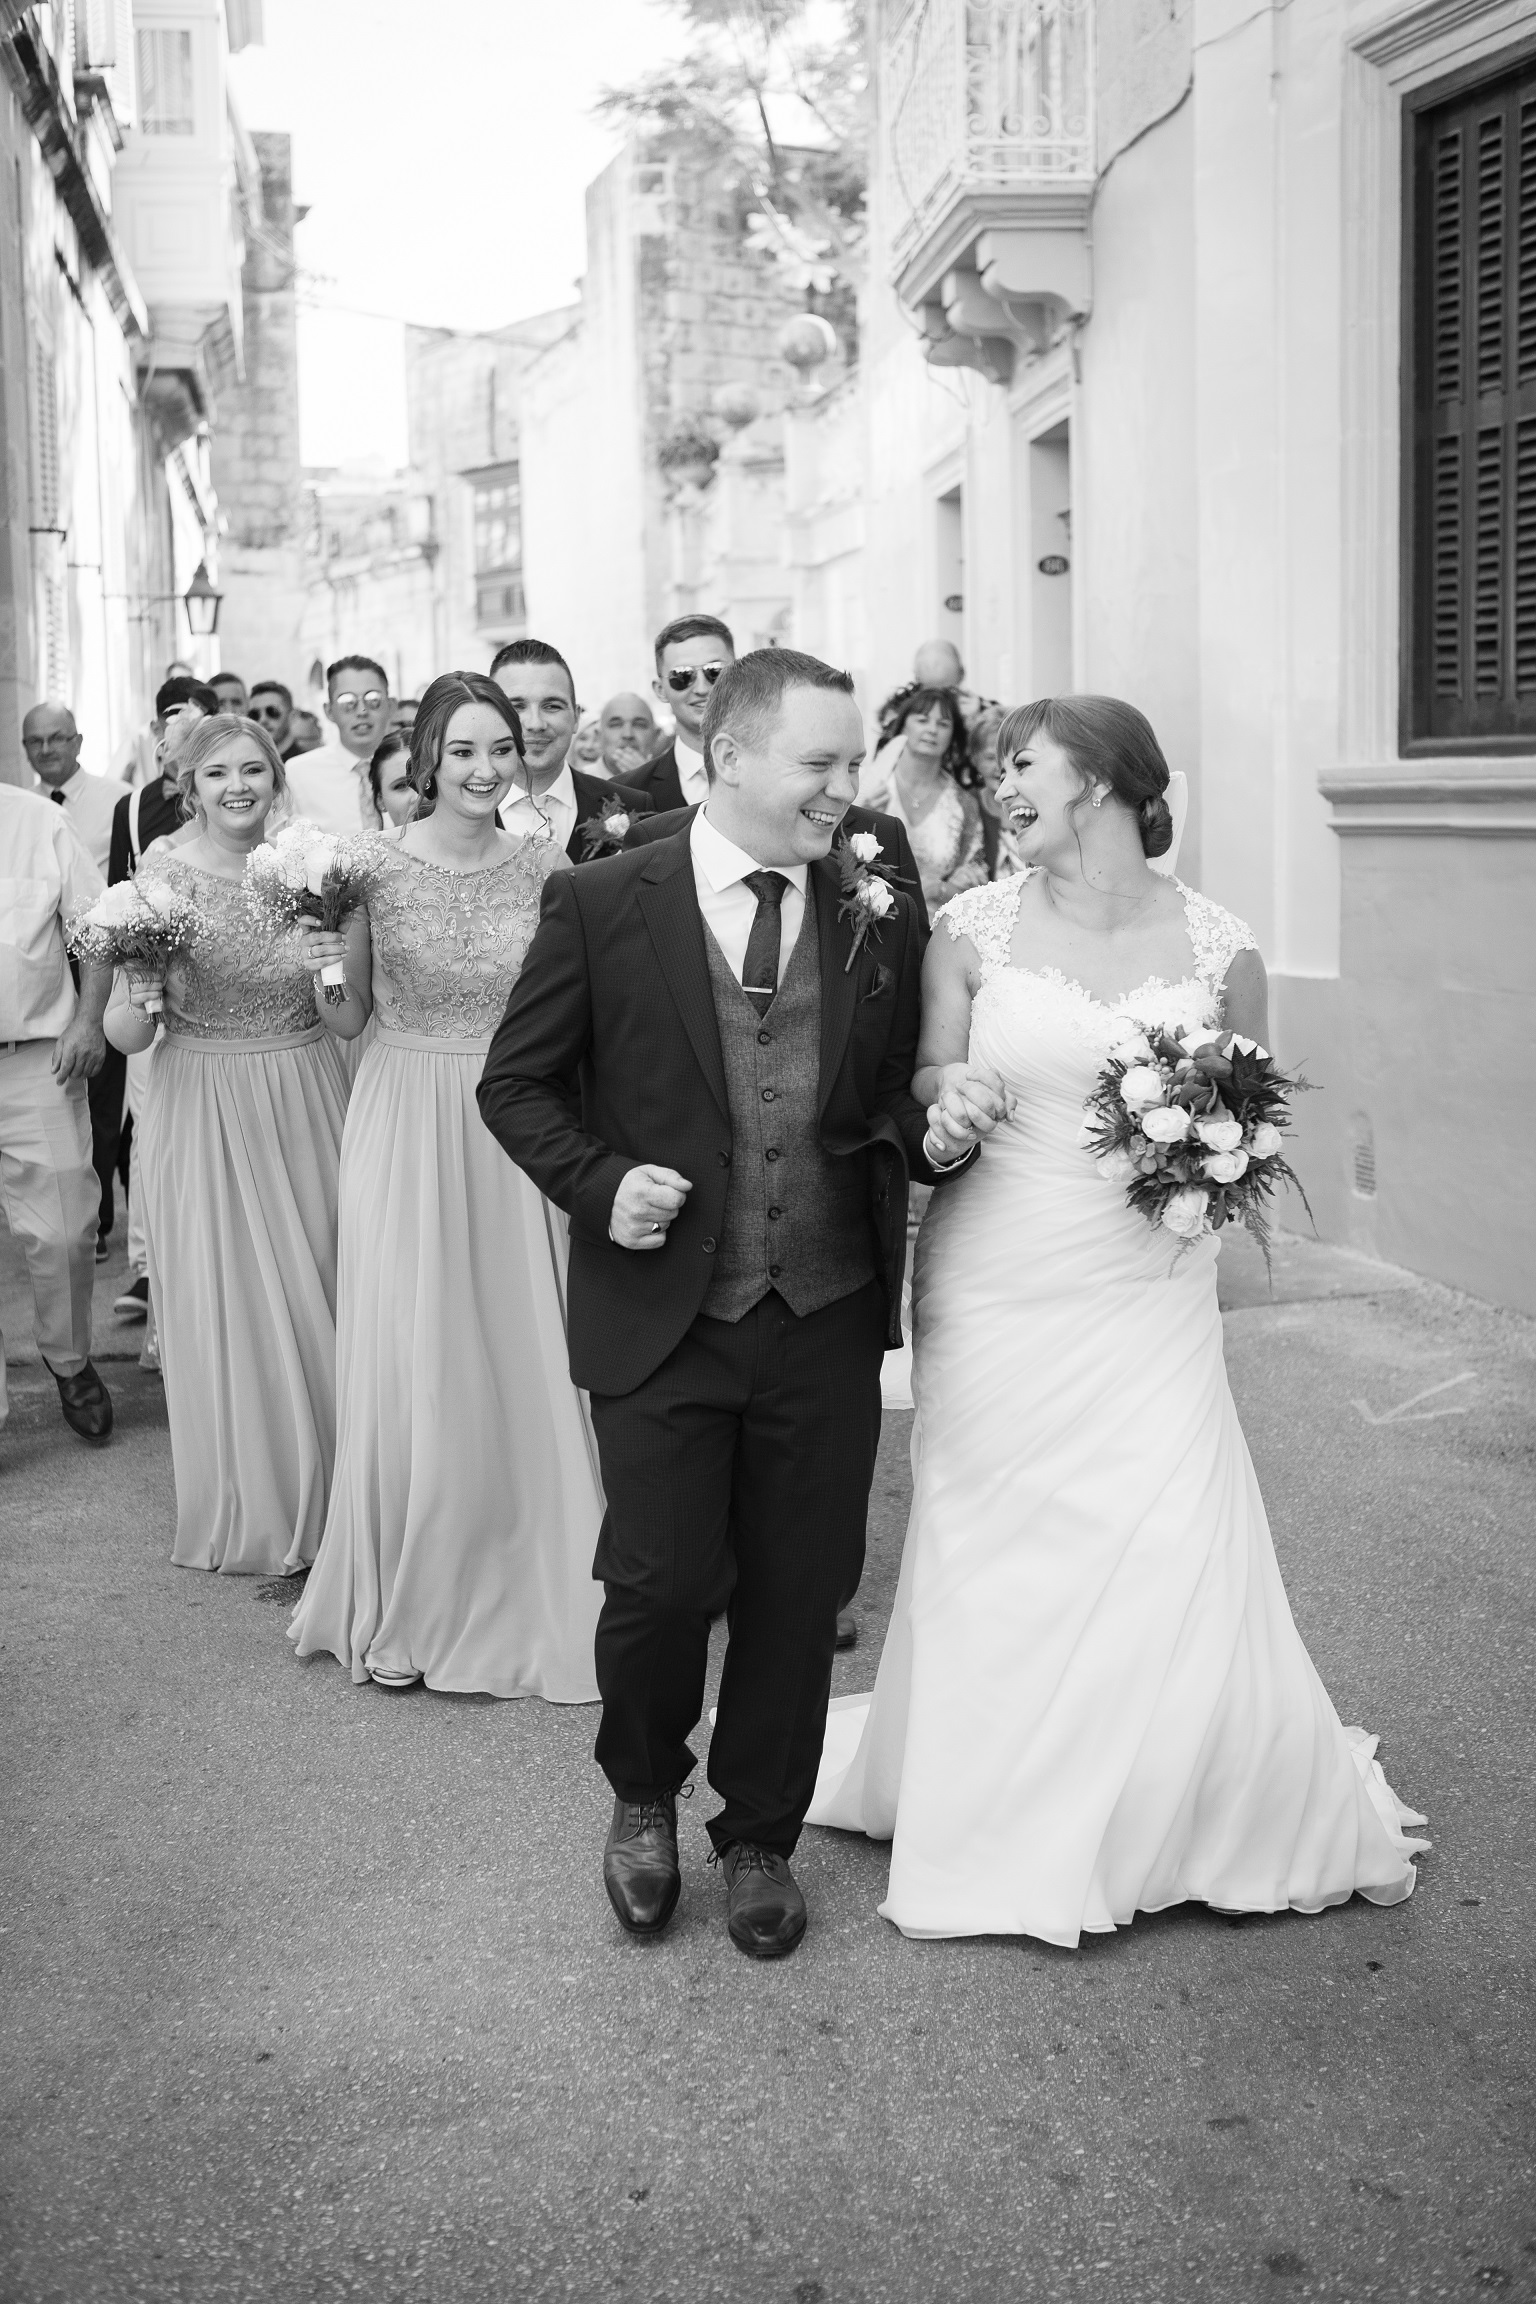 Jenny and John's wedding in Malta